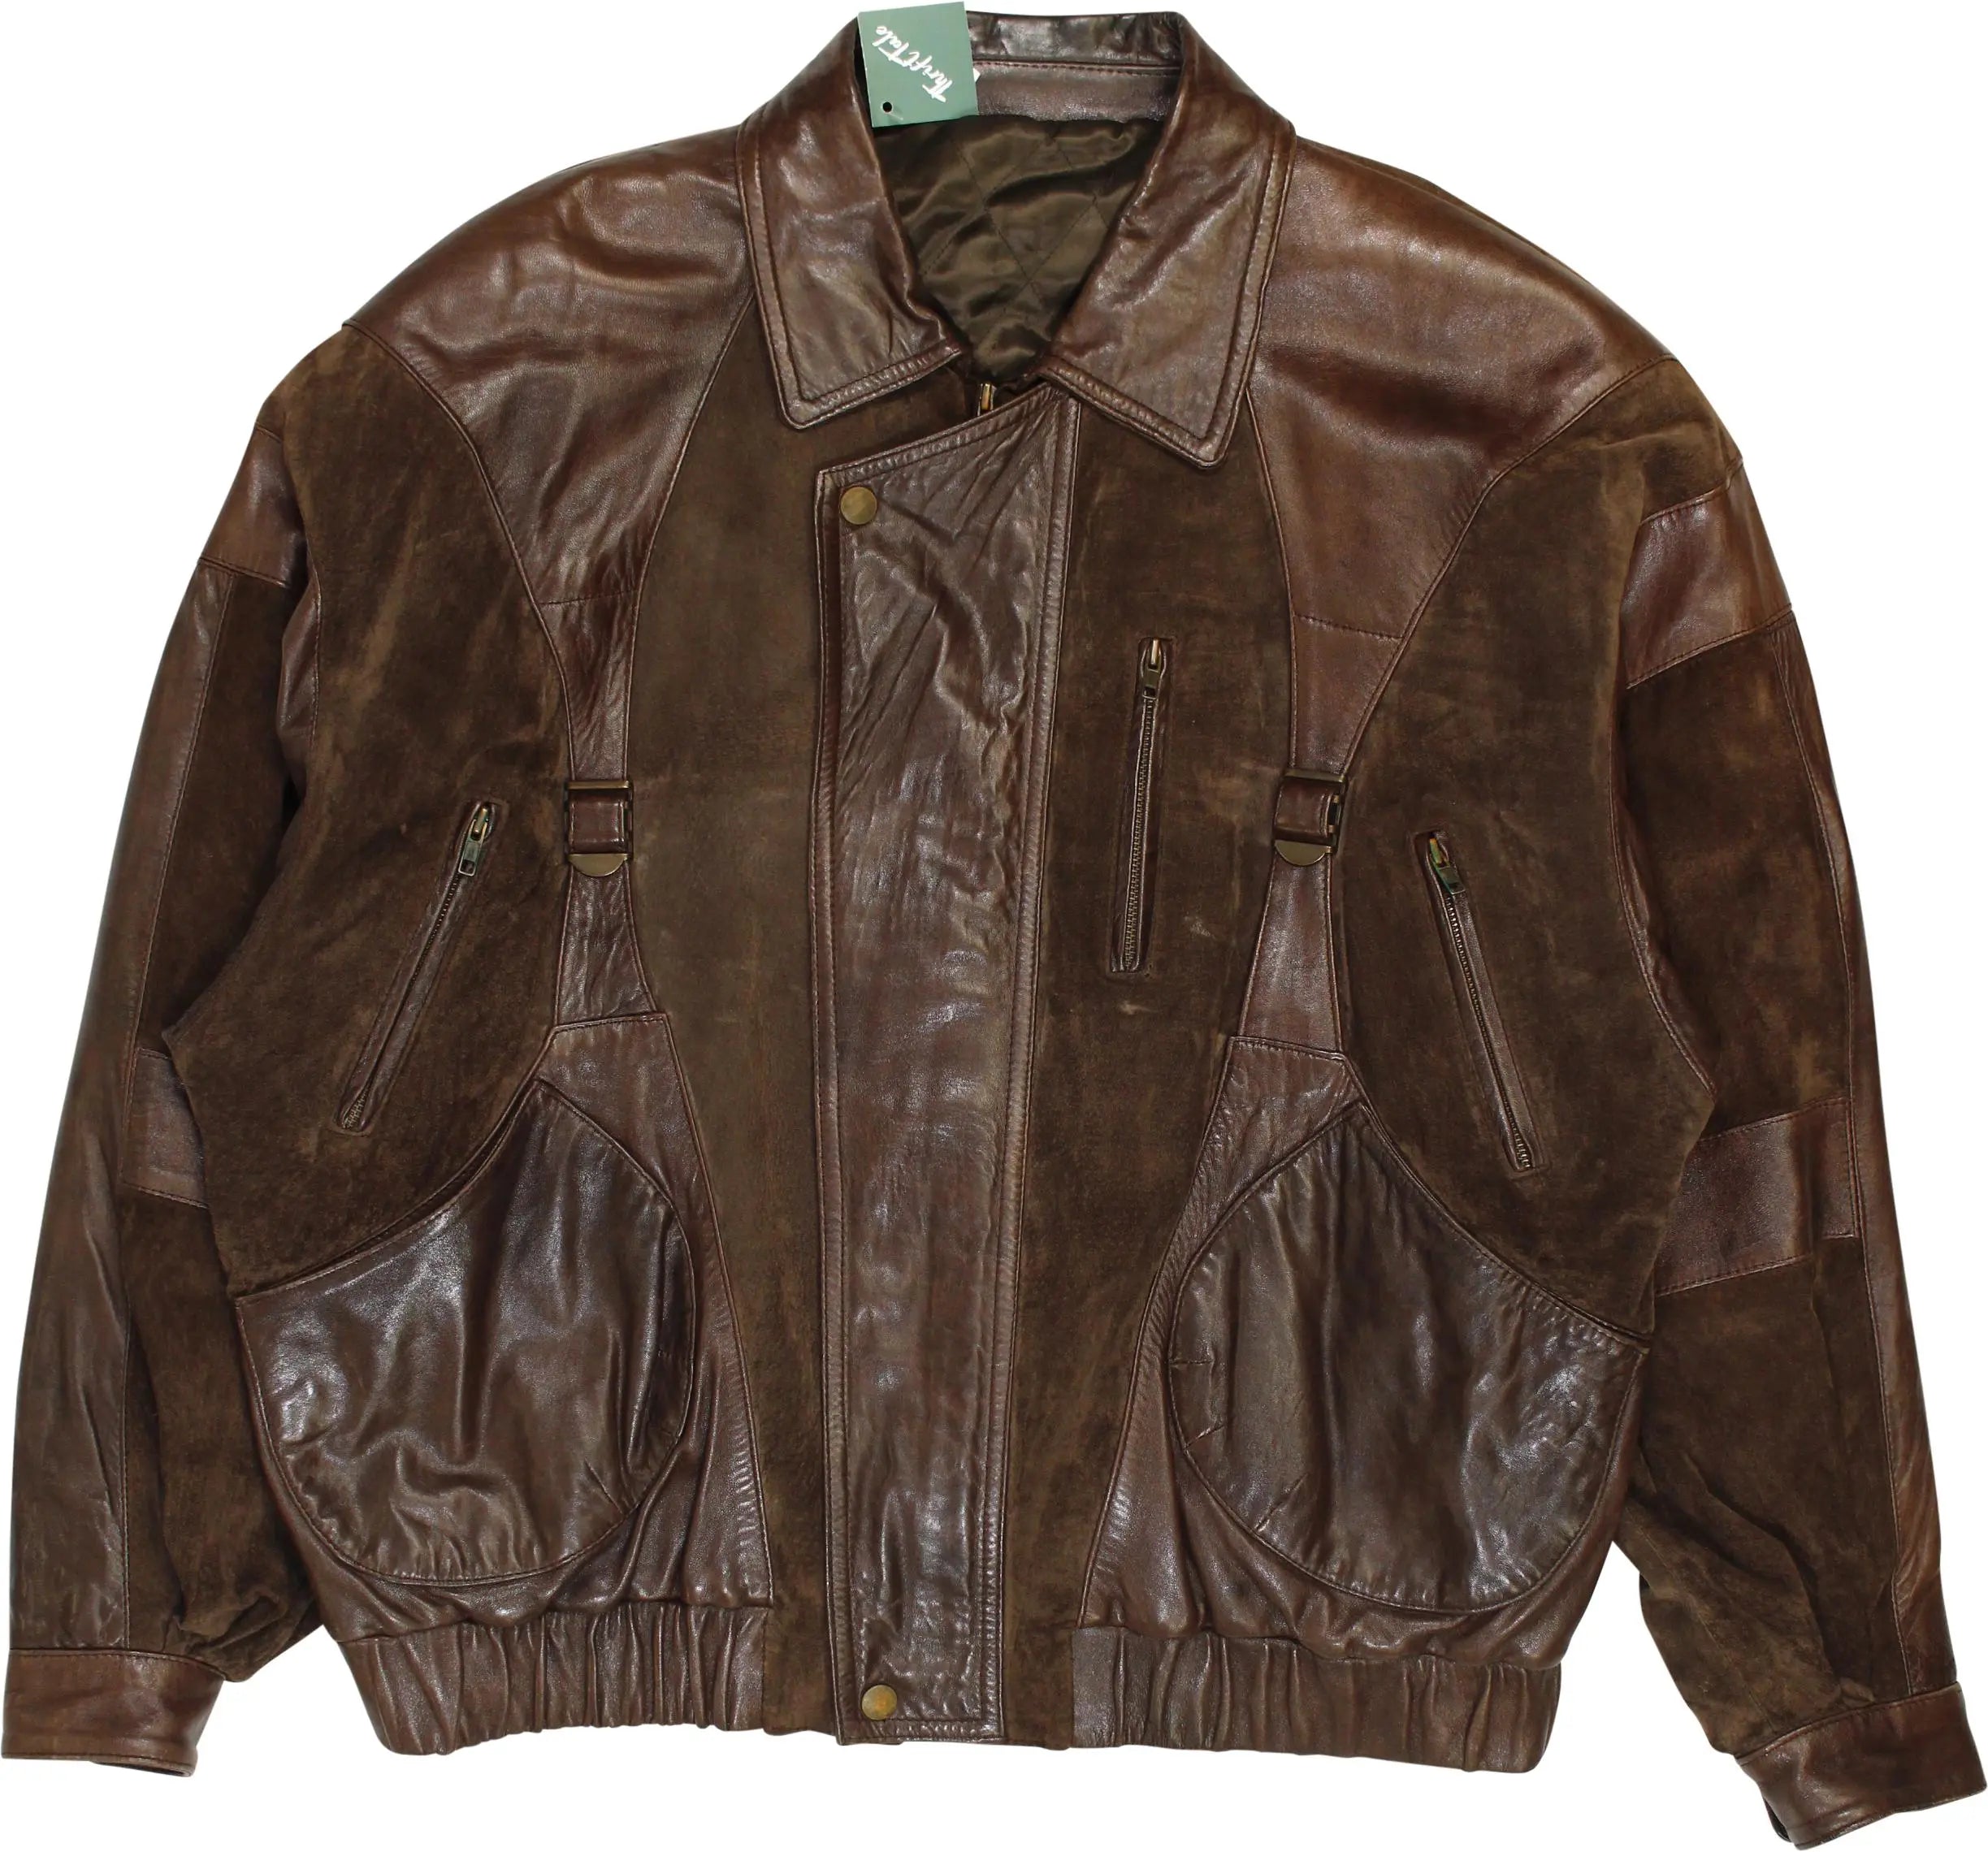 Bissel - Brown Leather Jacket- ThriftTale.com - Vintage and second handclothing